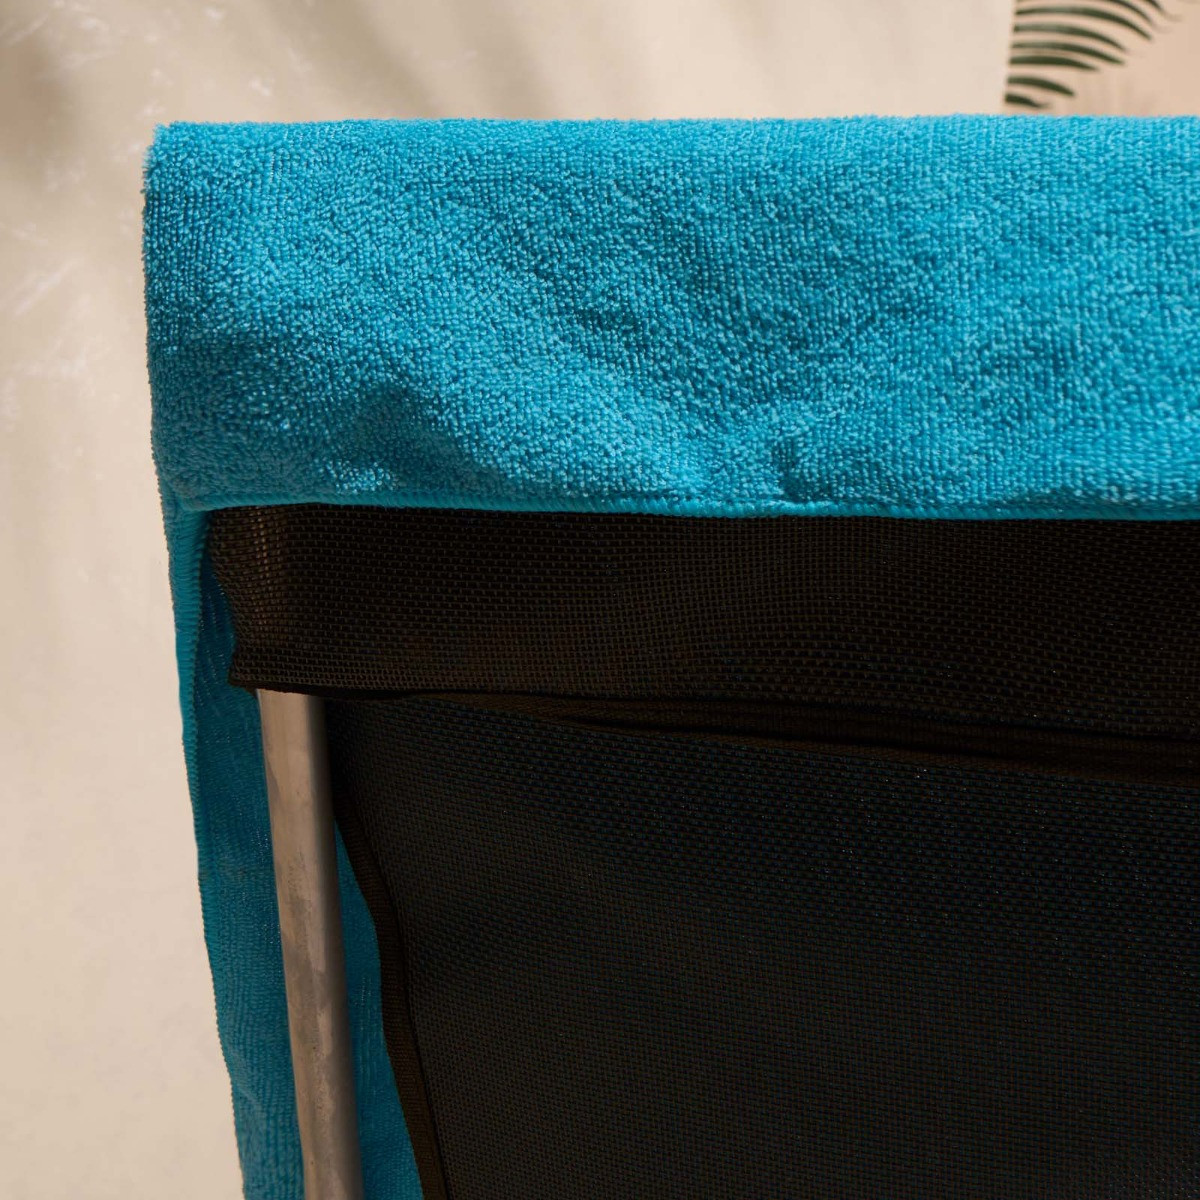 Brentfords Beach Towel In A Bag - Sea Blue>